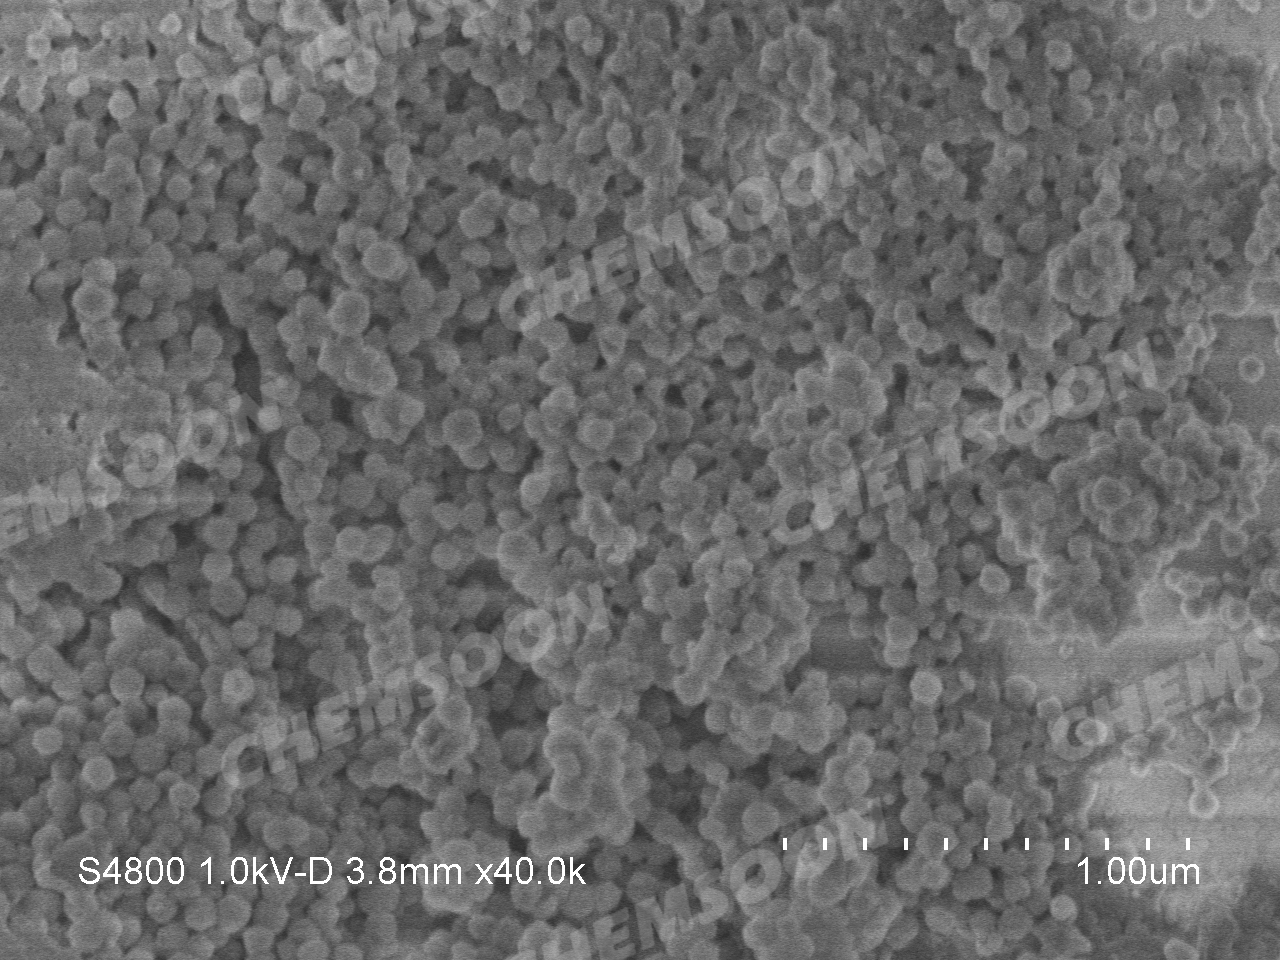 SEM-MIL-101Cr nanoparticle